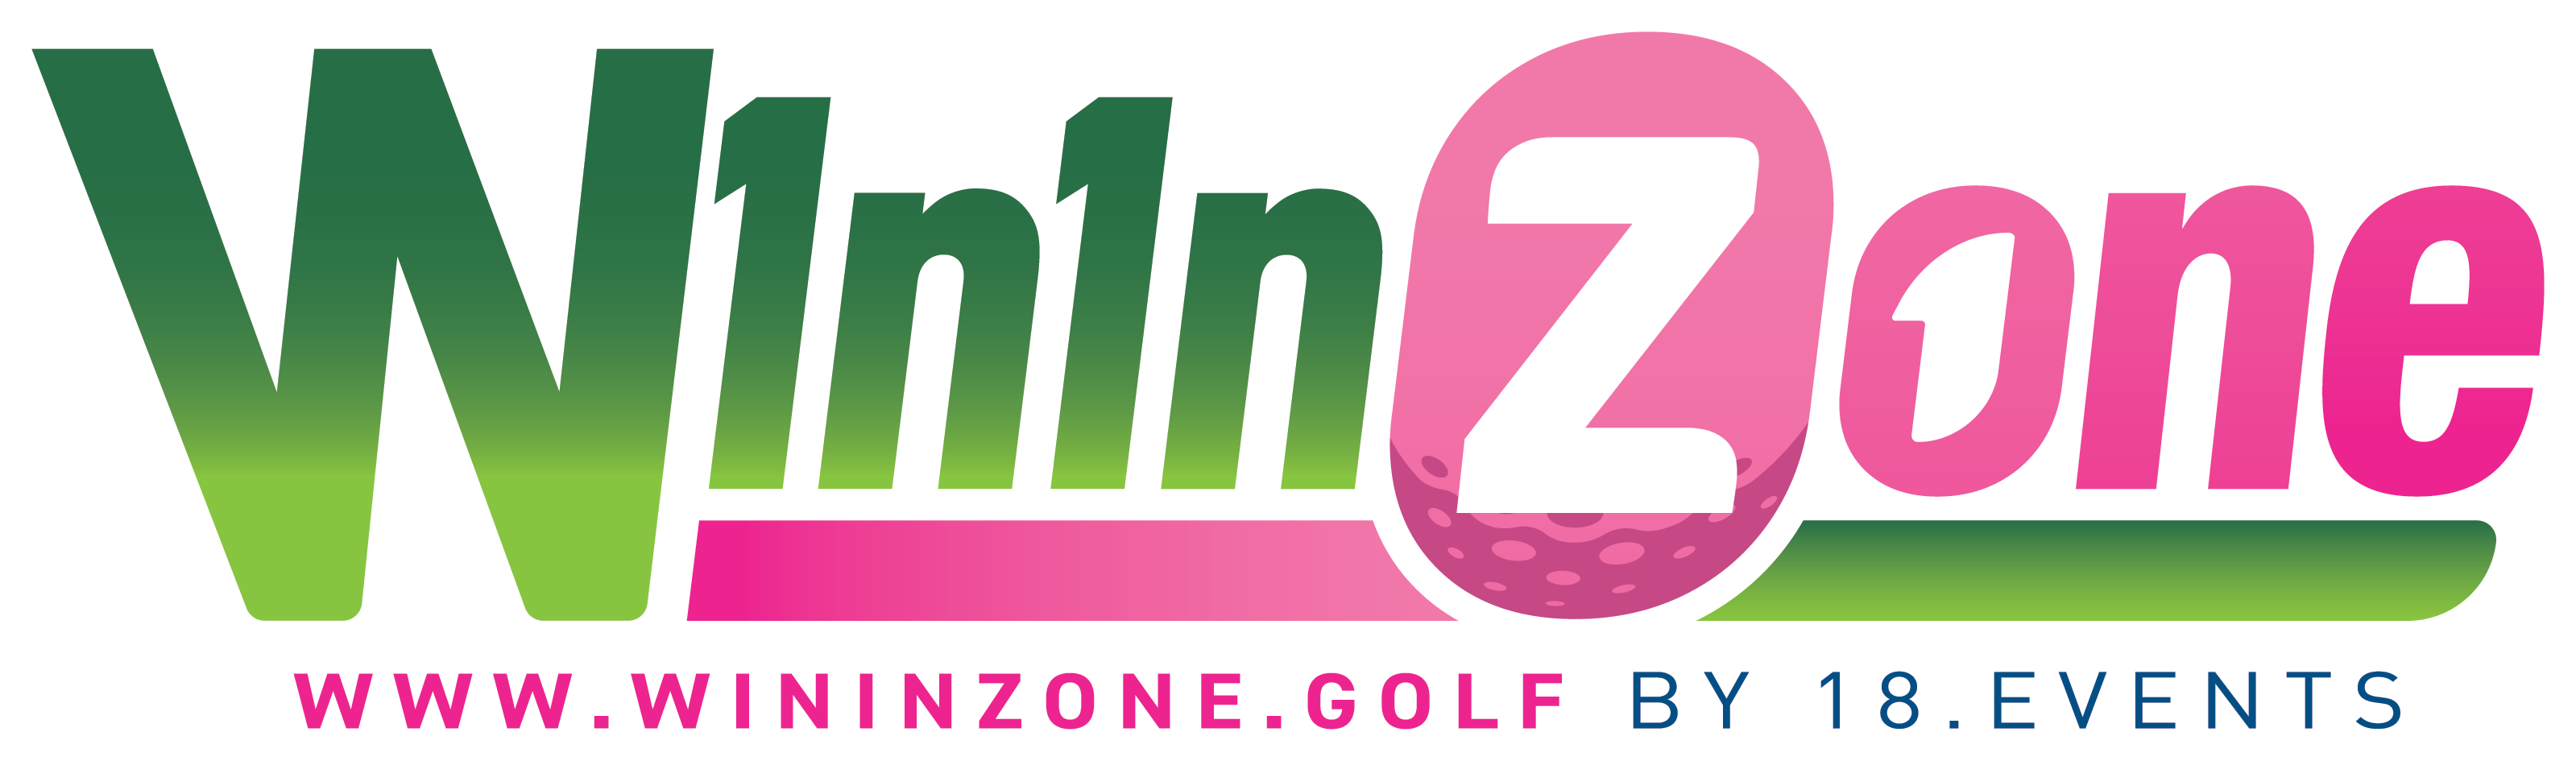 logo wininzone